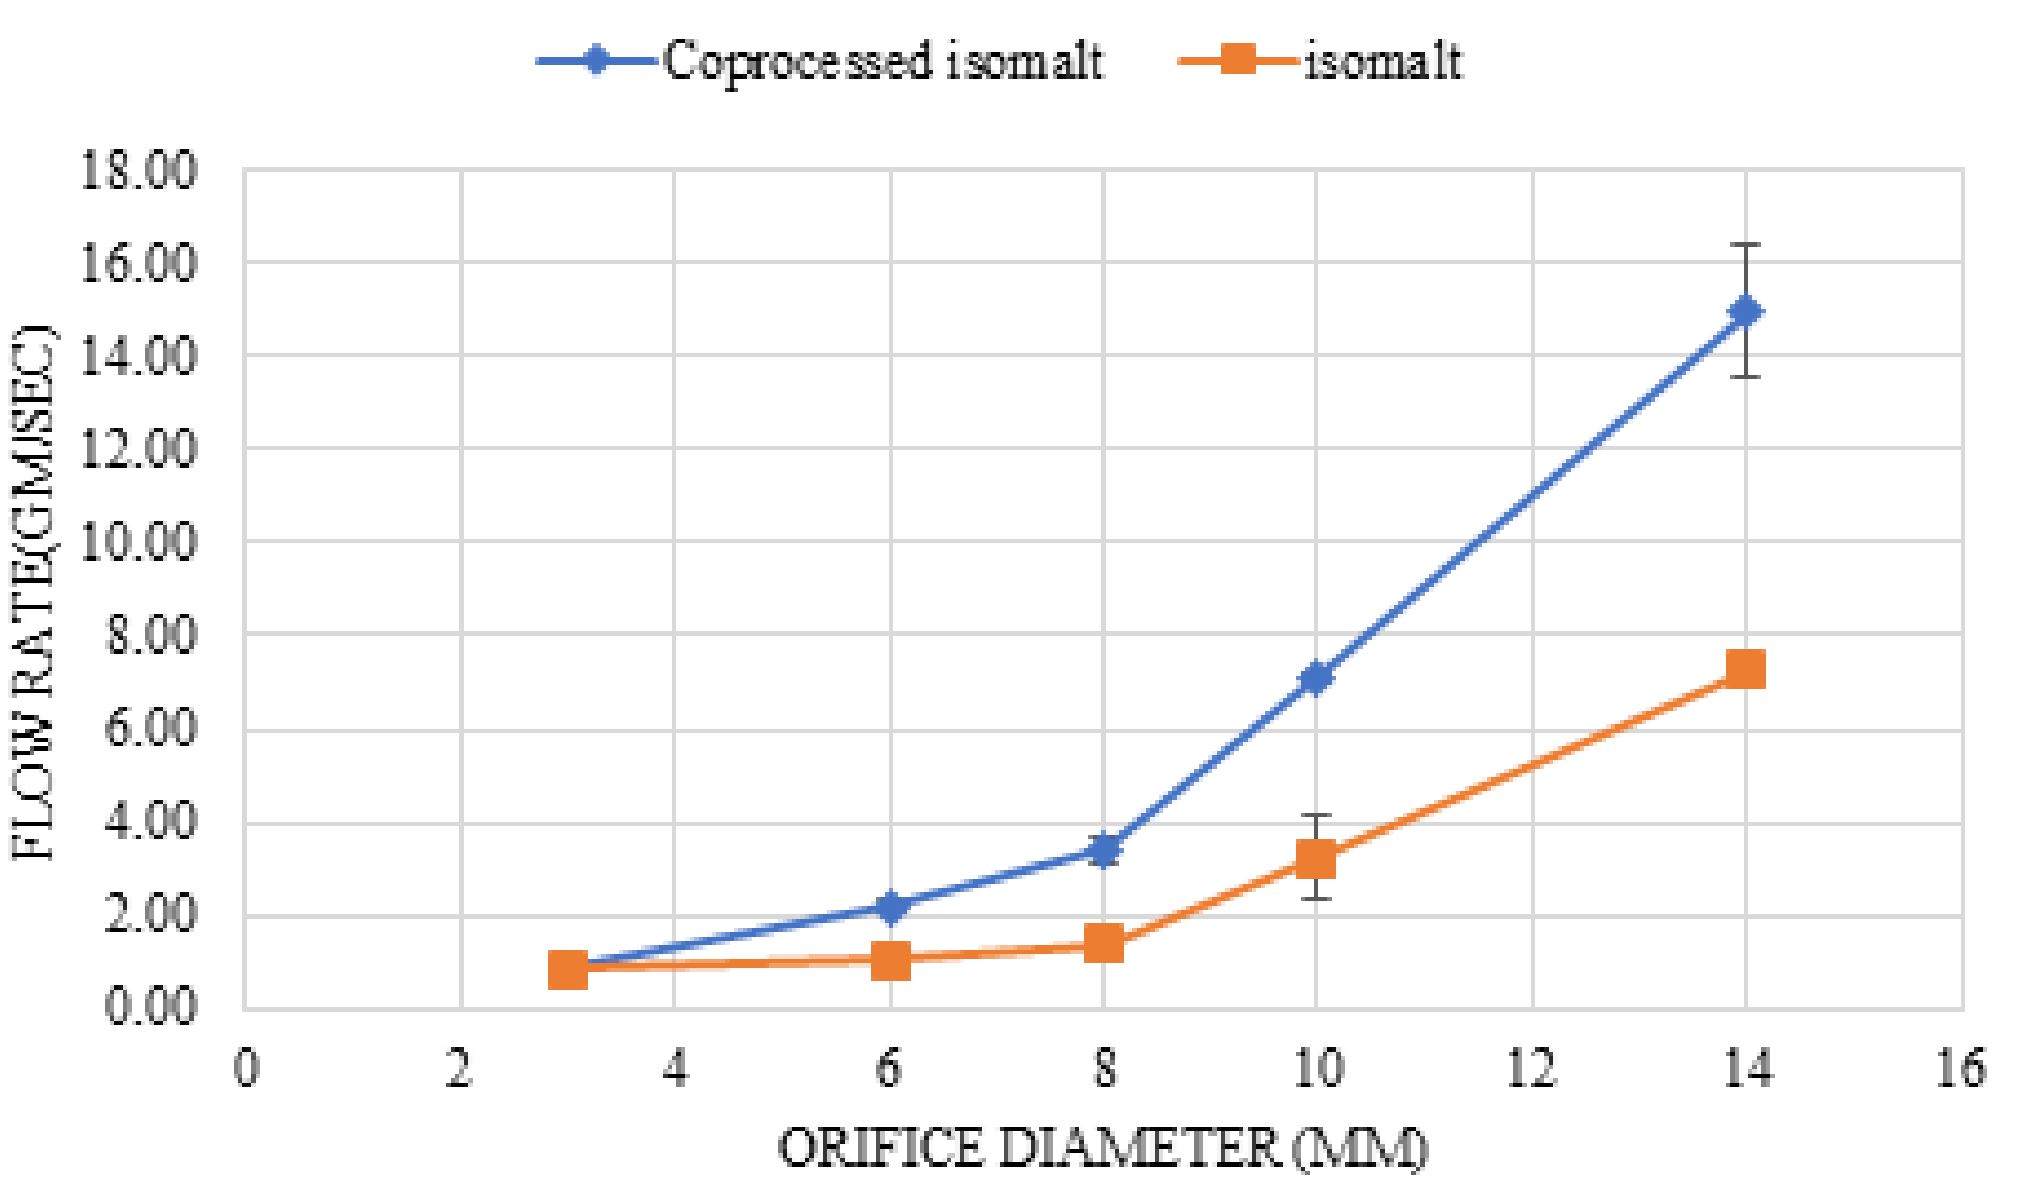 Comparative Study of Isomalt and Co-processed Isomalt